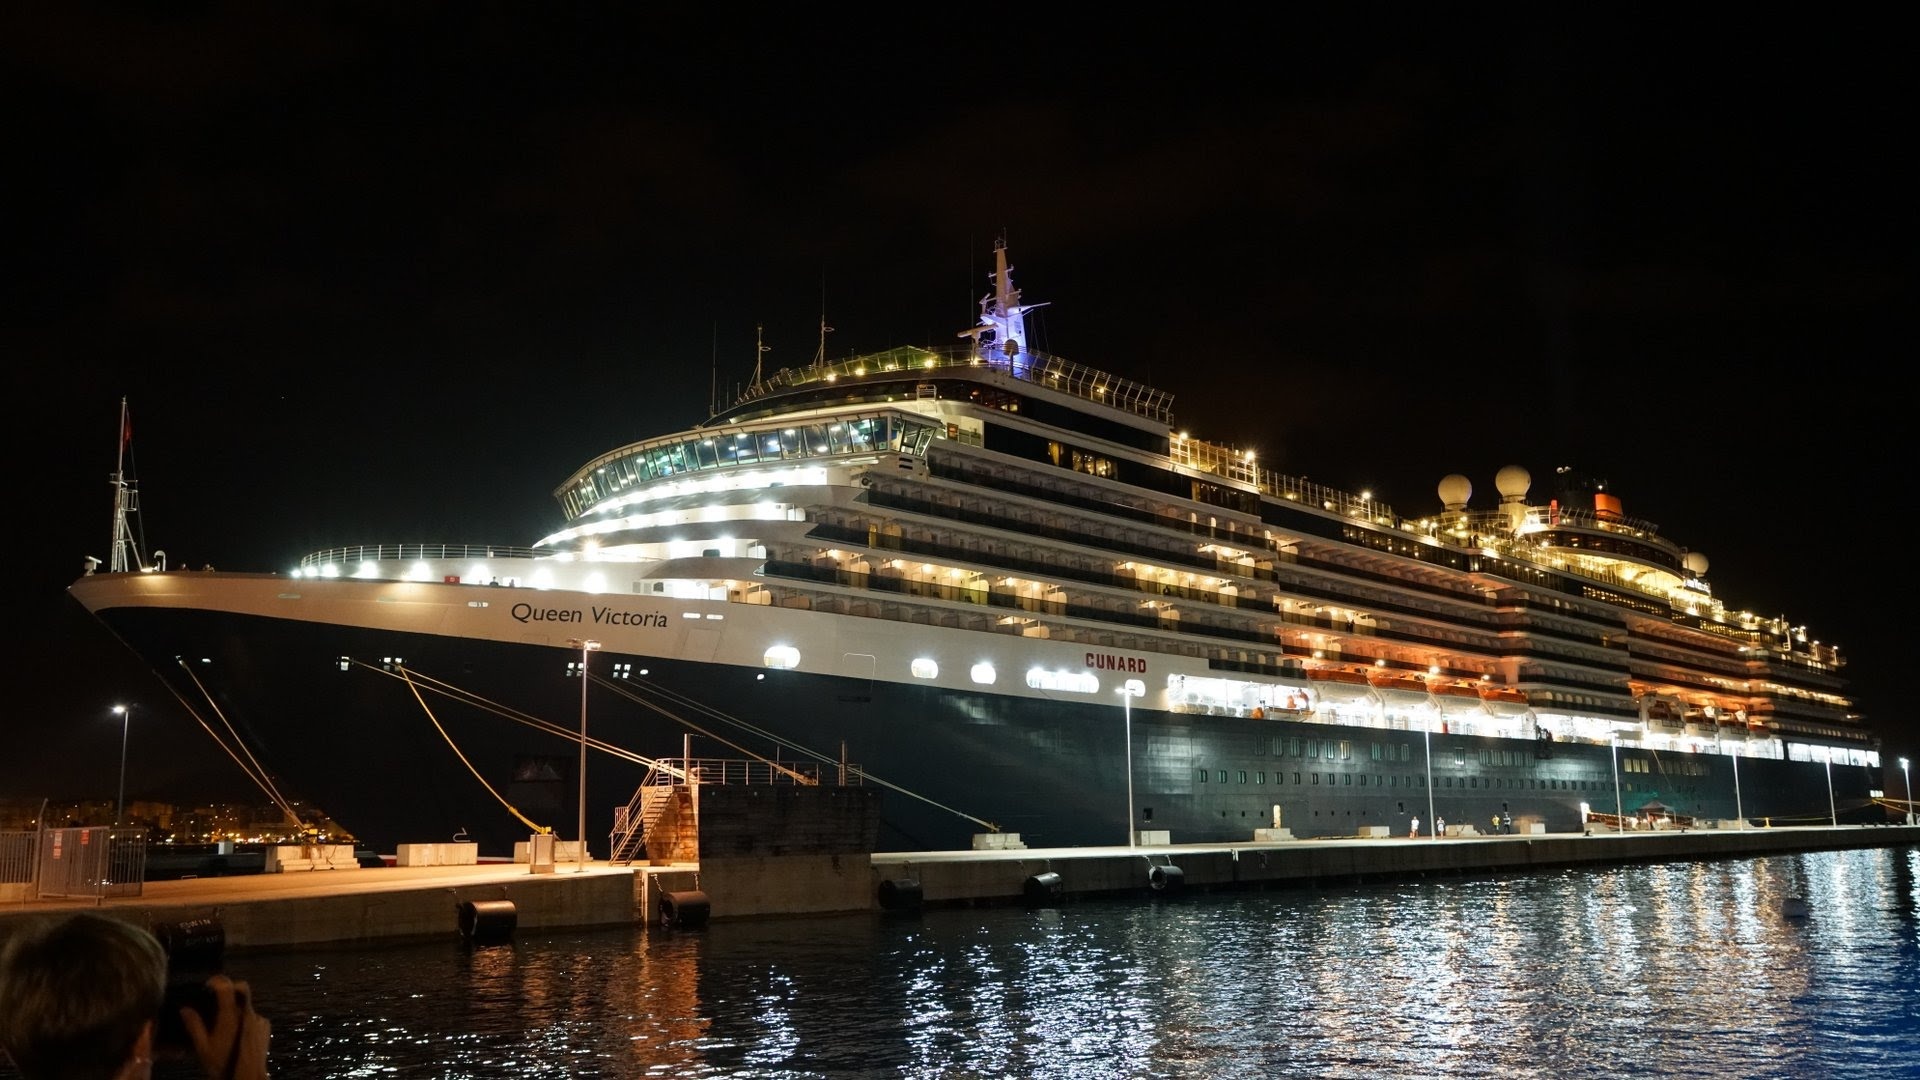 Cruiser (Ship): MS Queen Victoria, A Vista-class cruise vessel, The Cunard Line. 1920x1080 Full HD Wallpaper.